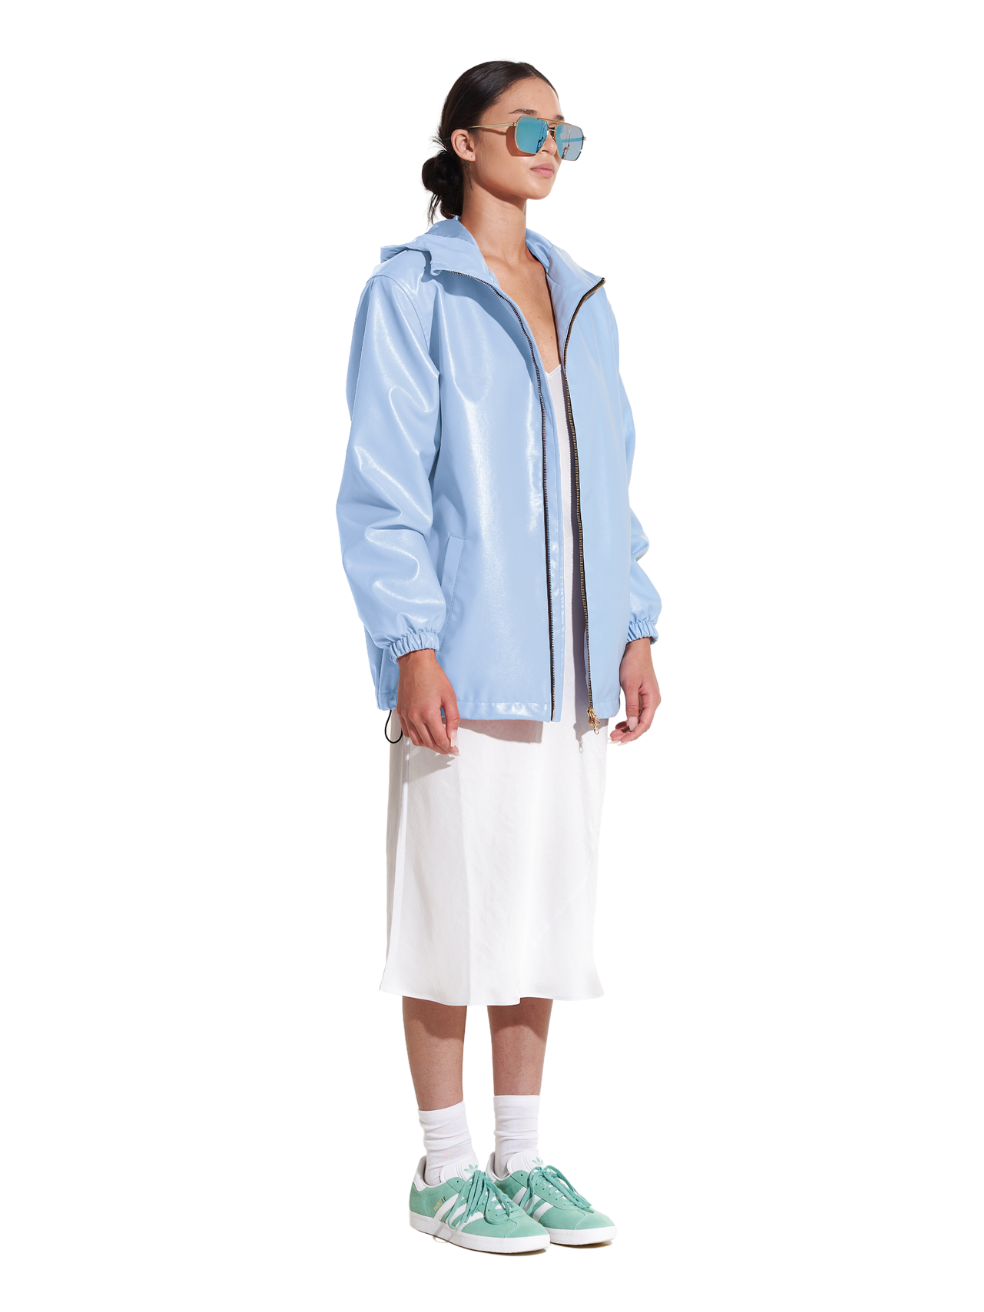 Hunter Capri Blue Sustainable Outerwear Raincoat Vegan Leather